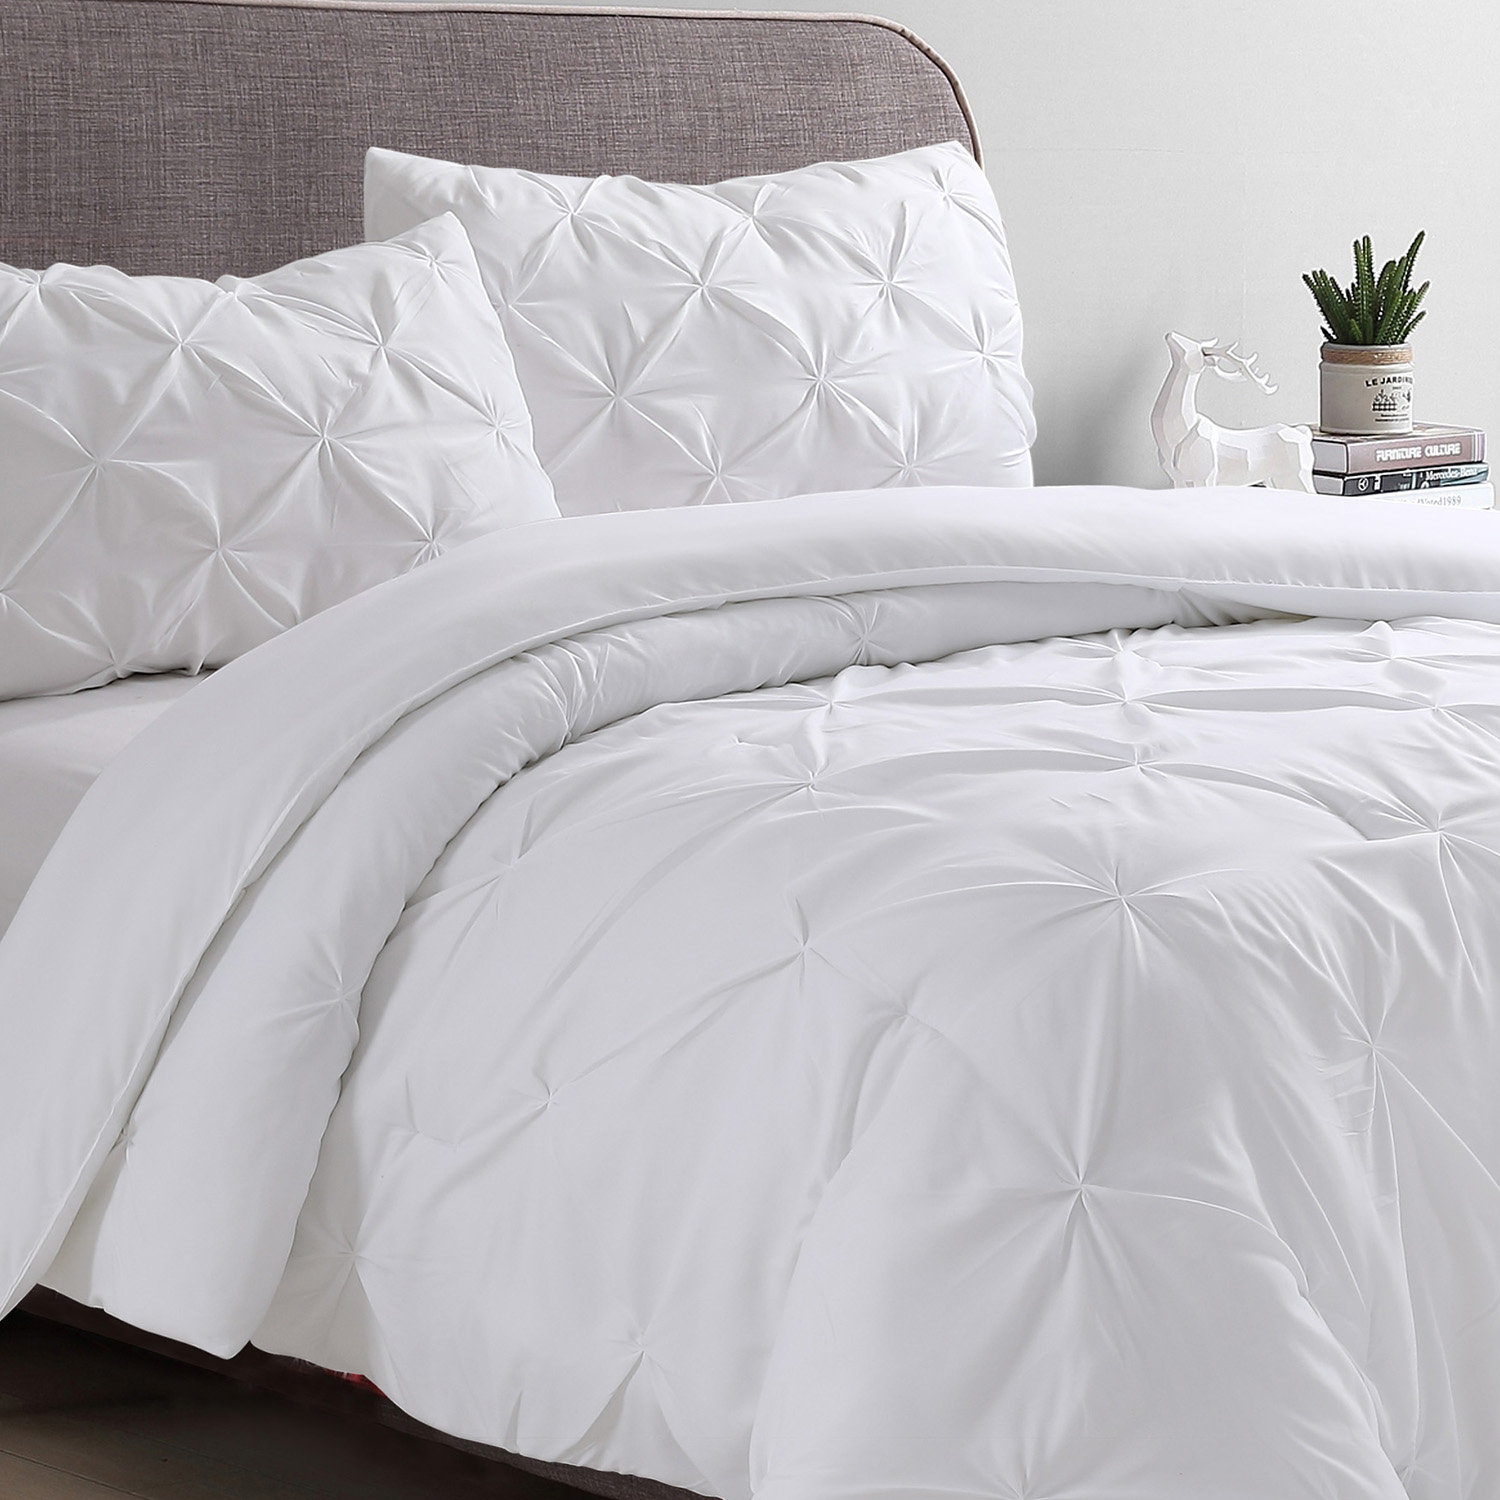 SALE] Supreme Patchy Luxury Brand Logo Premium Bedding Set Home Decor